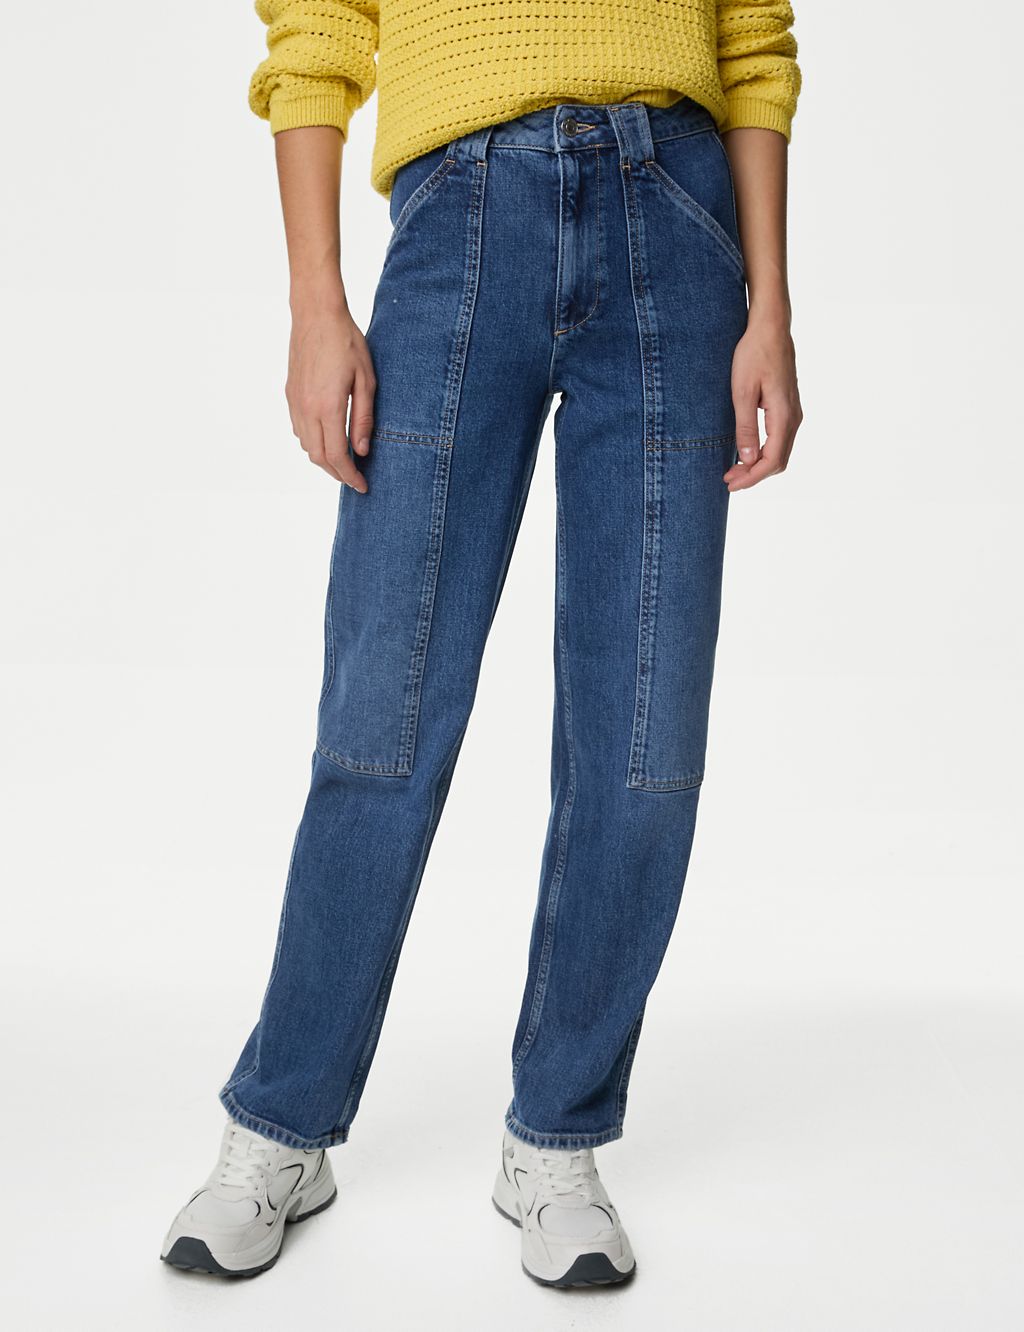 M&S Boyfriend Jeans Ankle Grazer Side High Denim Trousers Pants 6